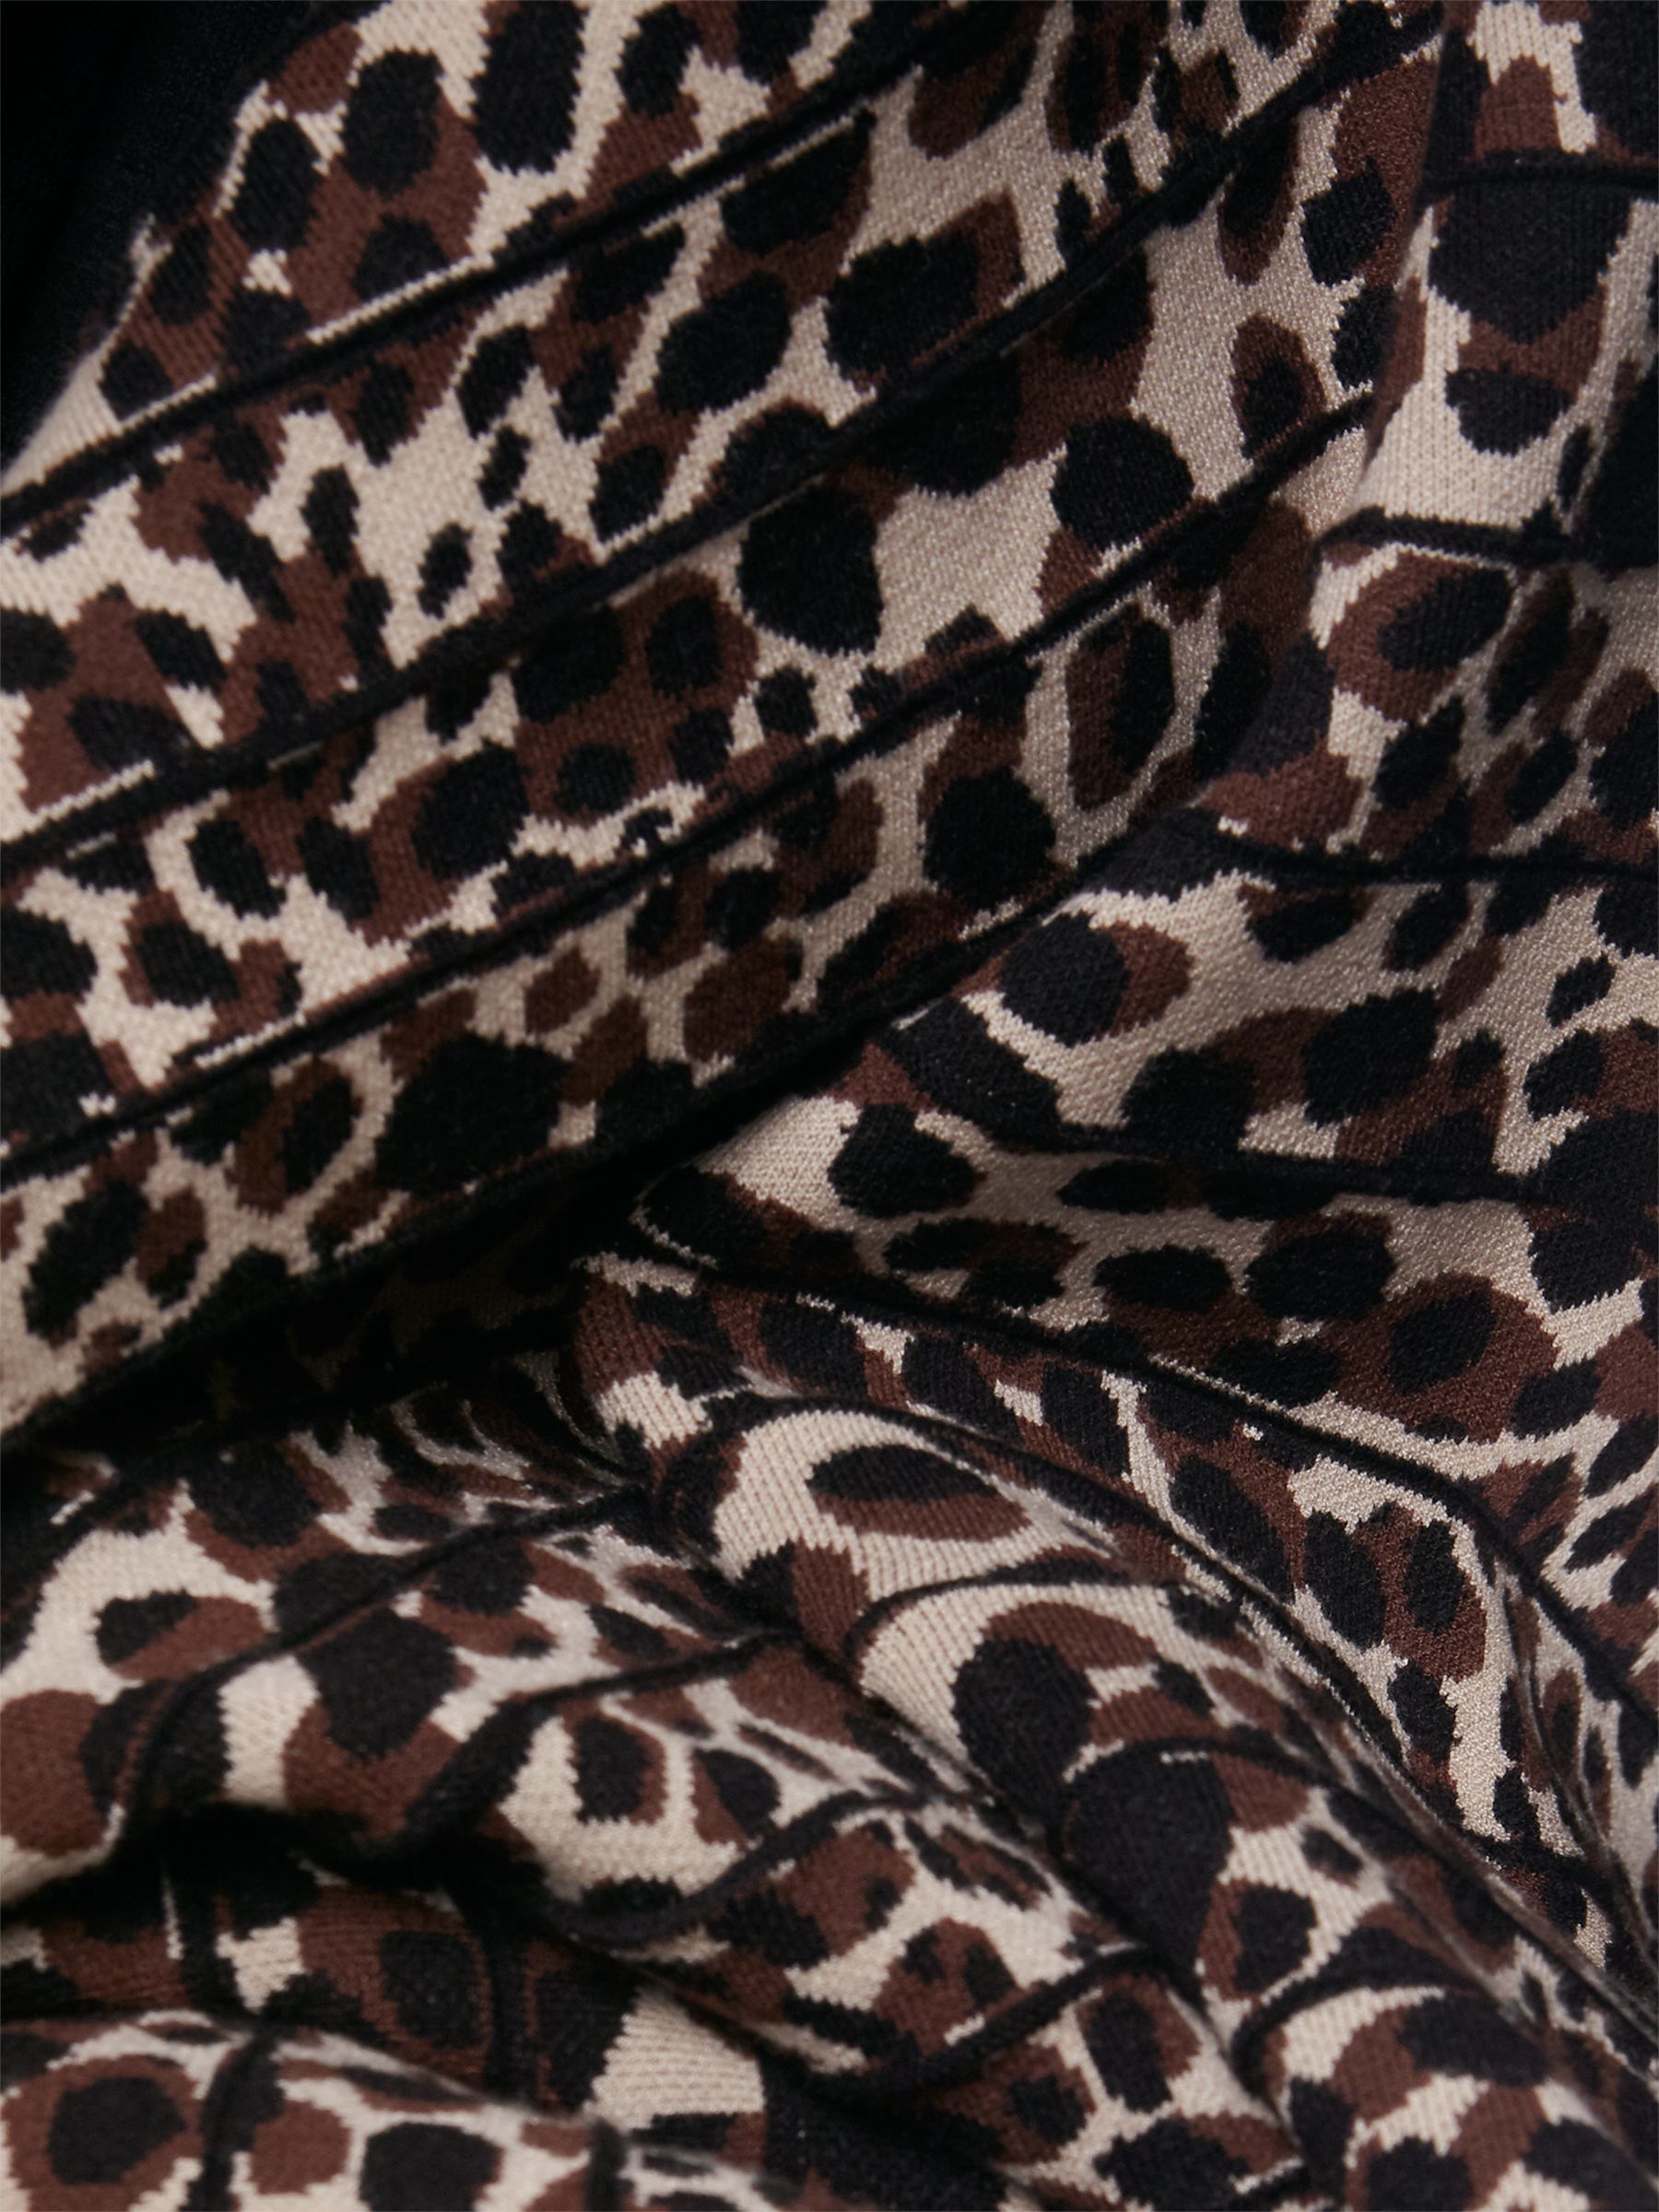 Buy Hobbs Petite Harlie Animal Print Midi Dress, Black/Brown Online at johnlewis.com